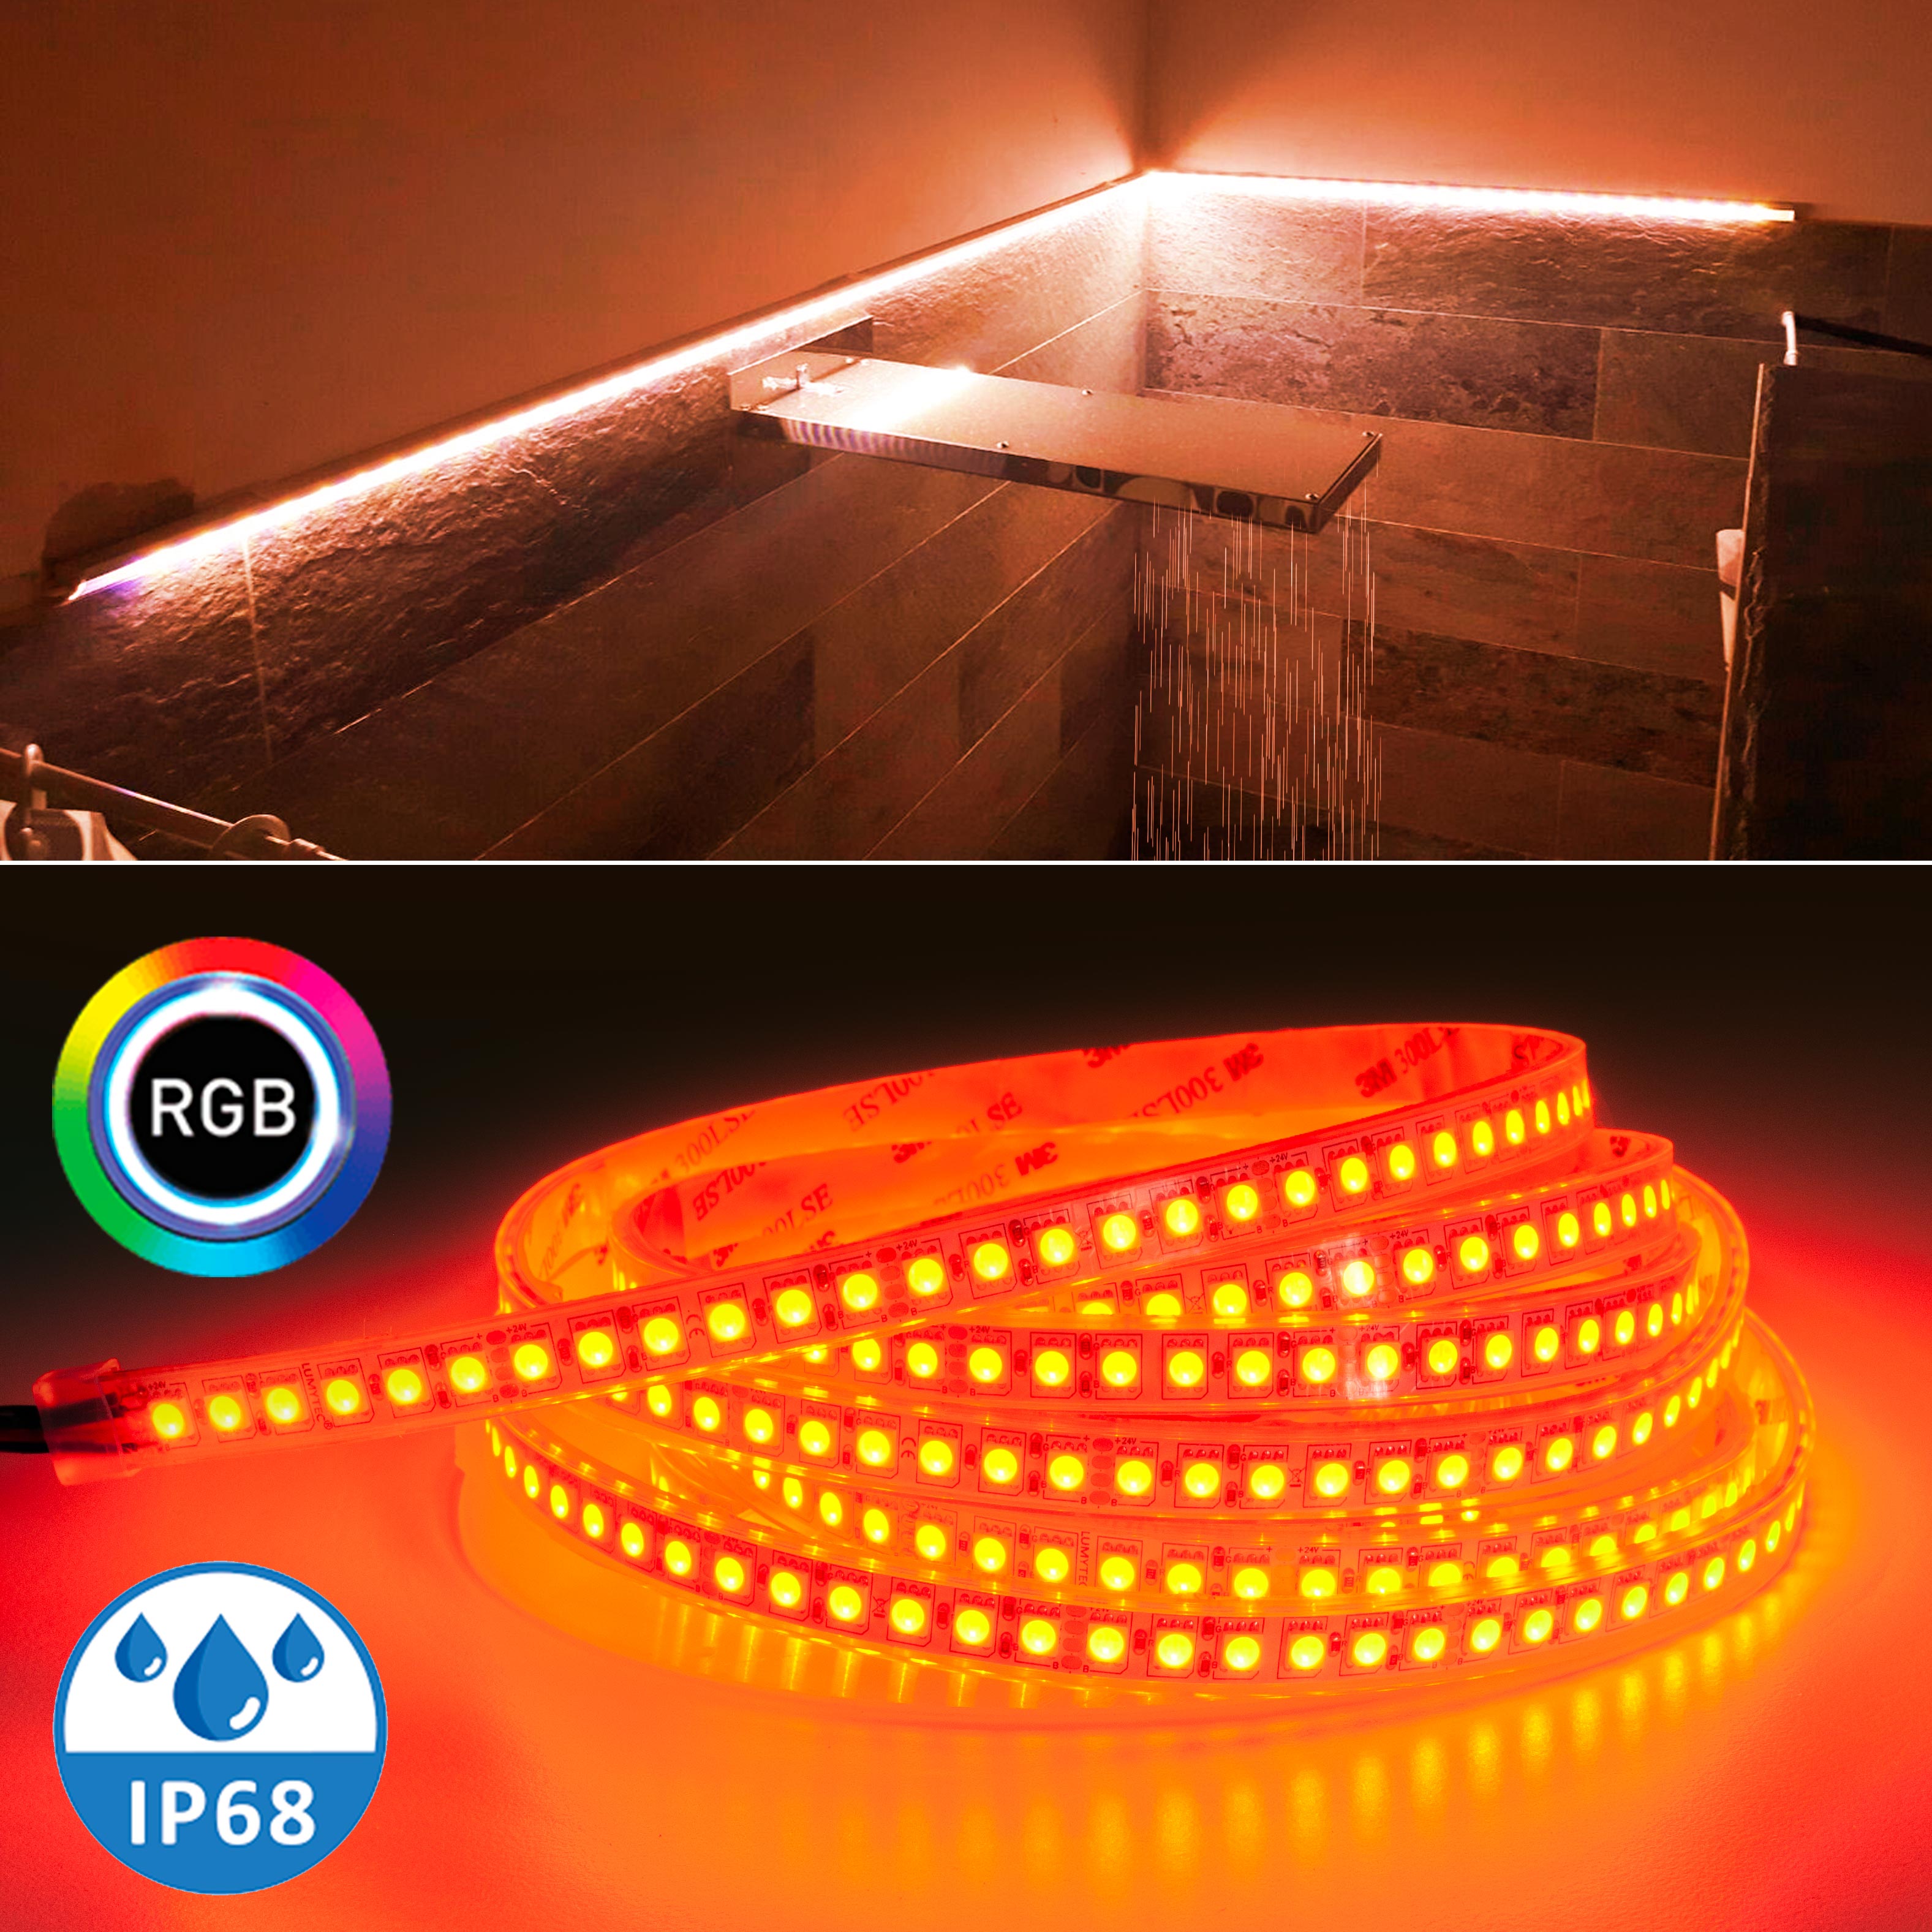 LE 10m Ruban LED RGB étanche IP65 SMD 5050 Multicolore Dimmable